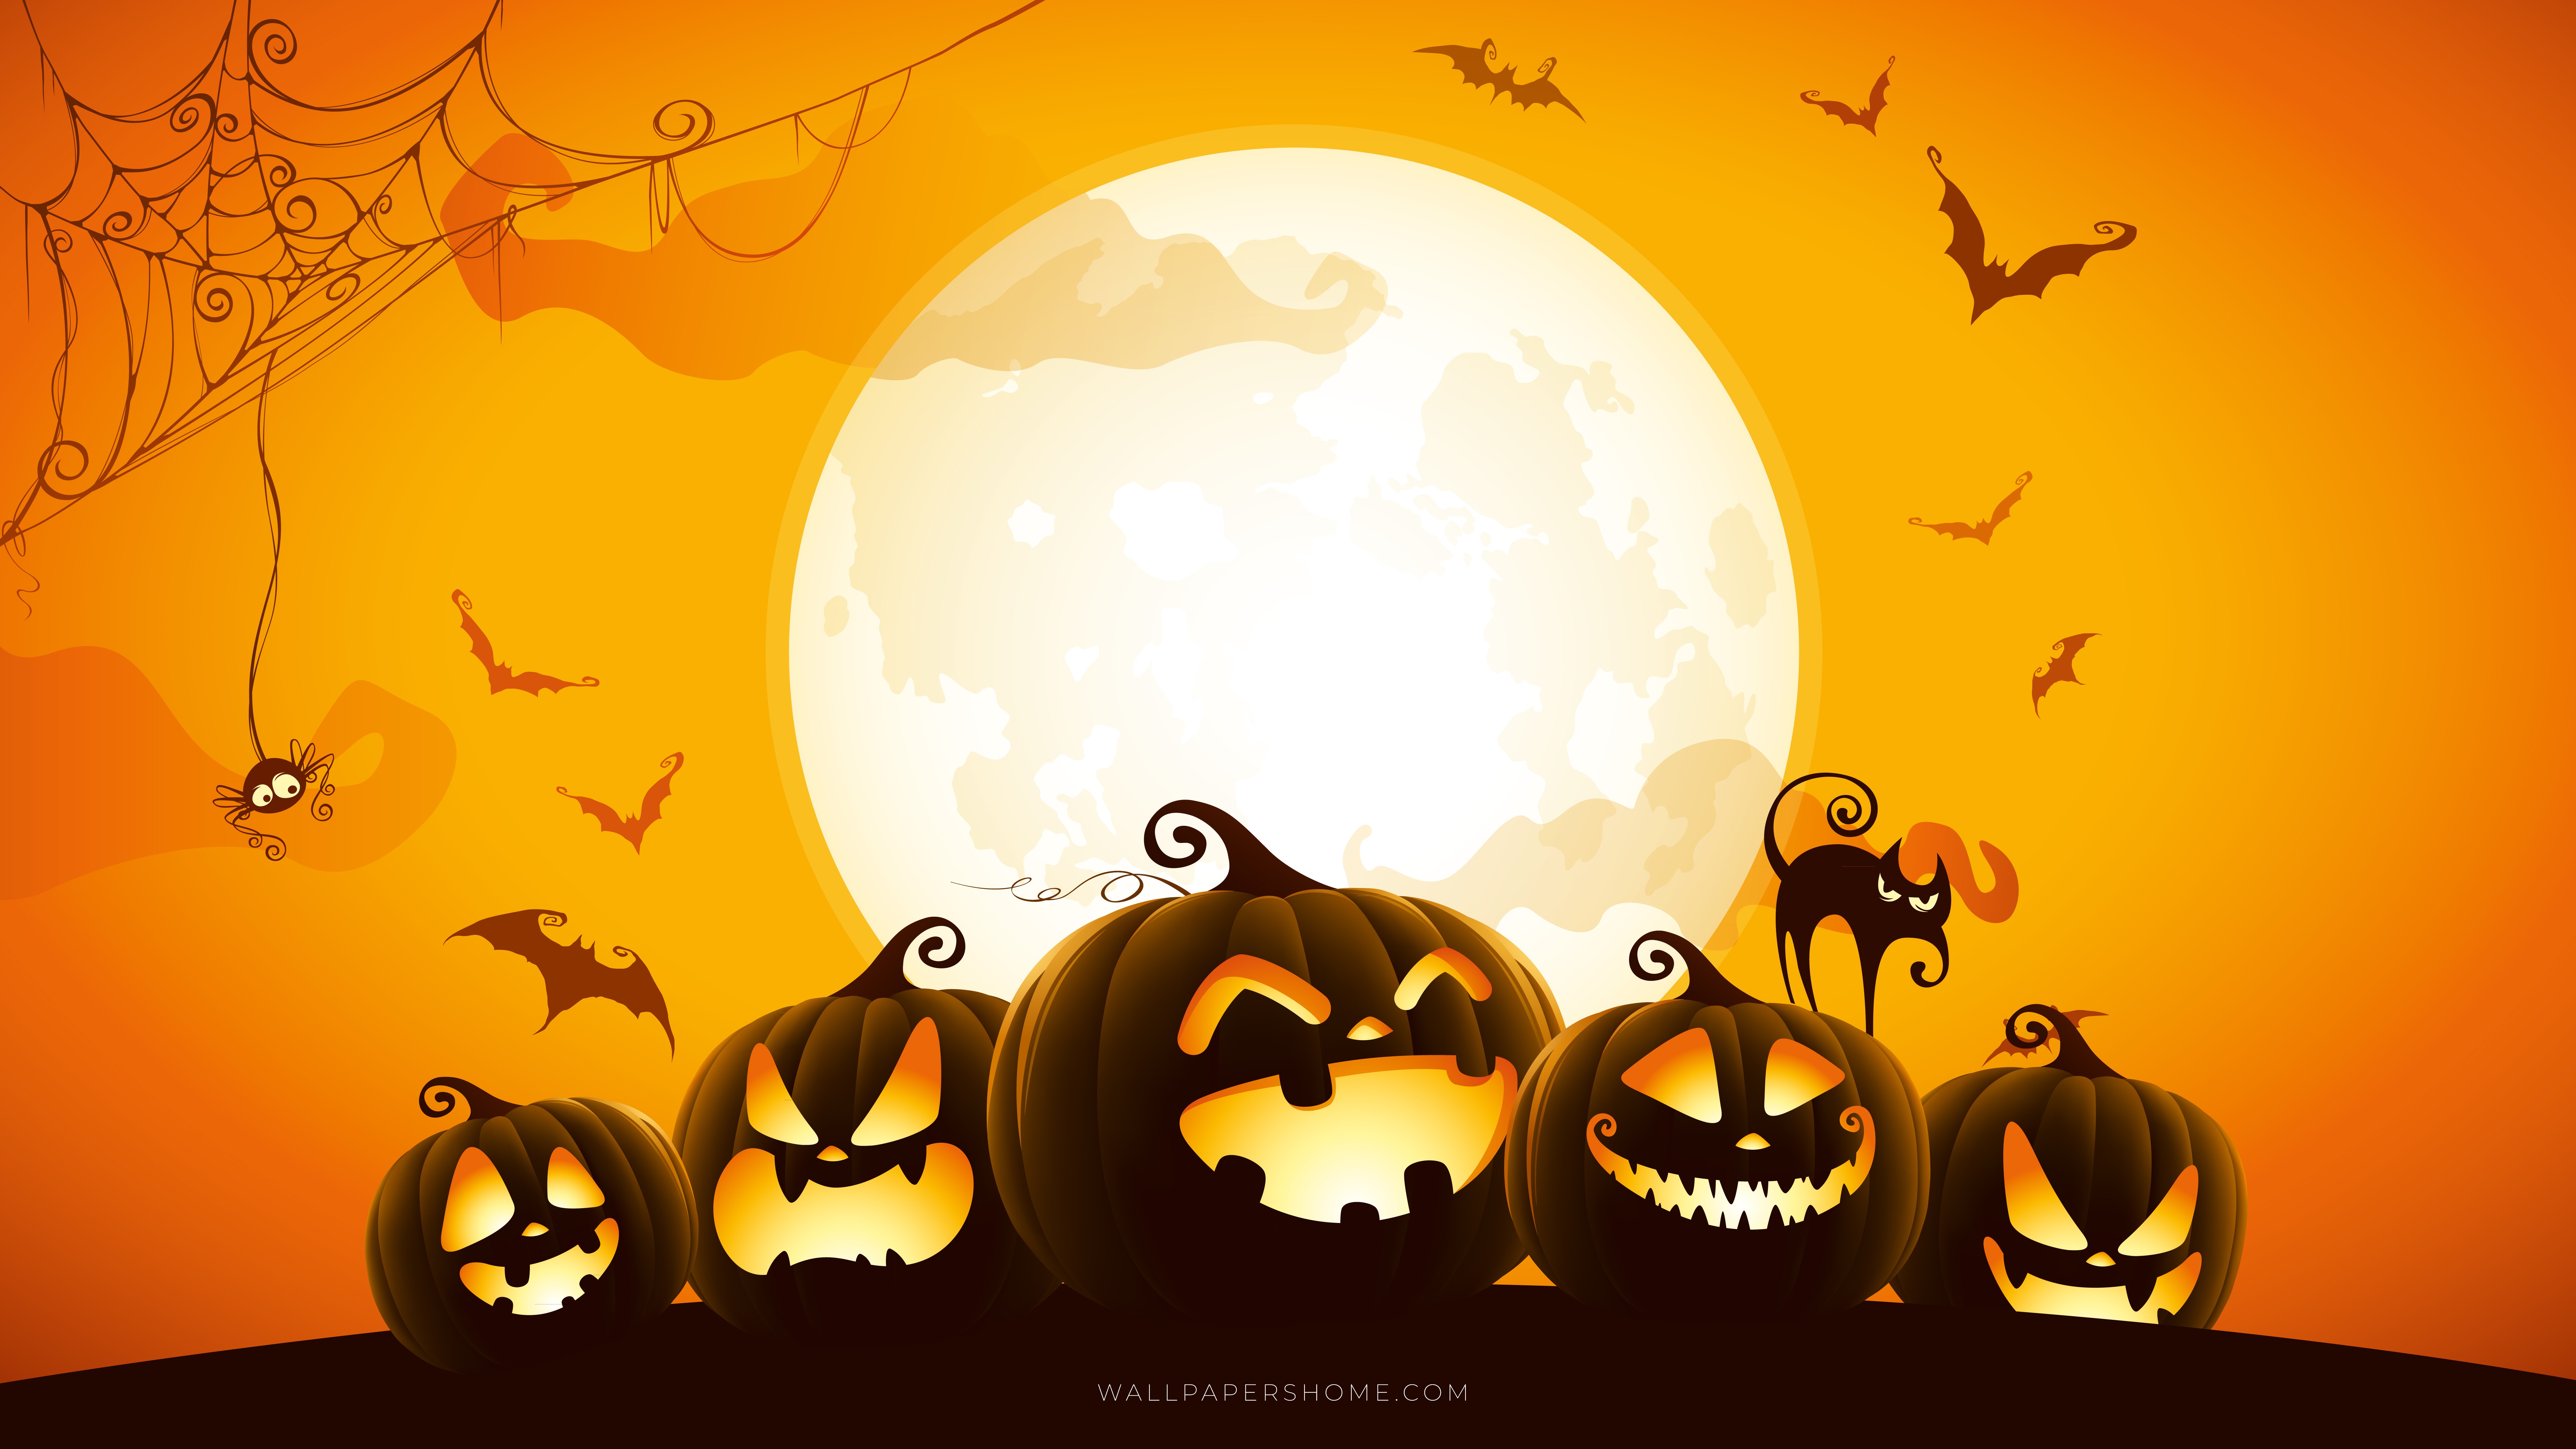 General 7680x4320 Halloween spooky pumpkin digital art